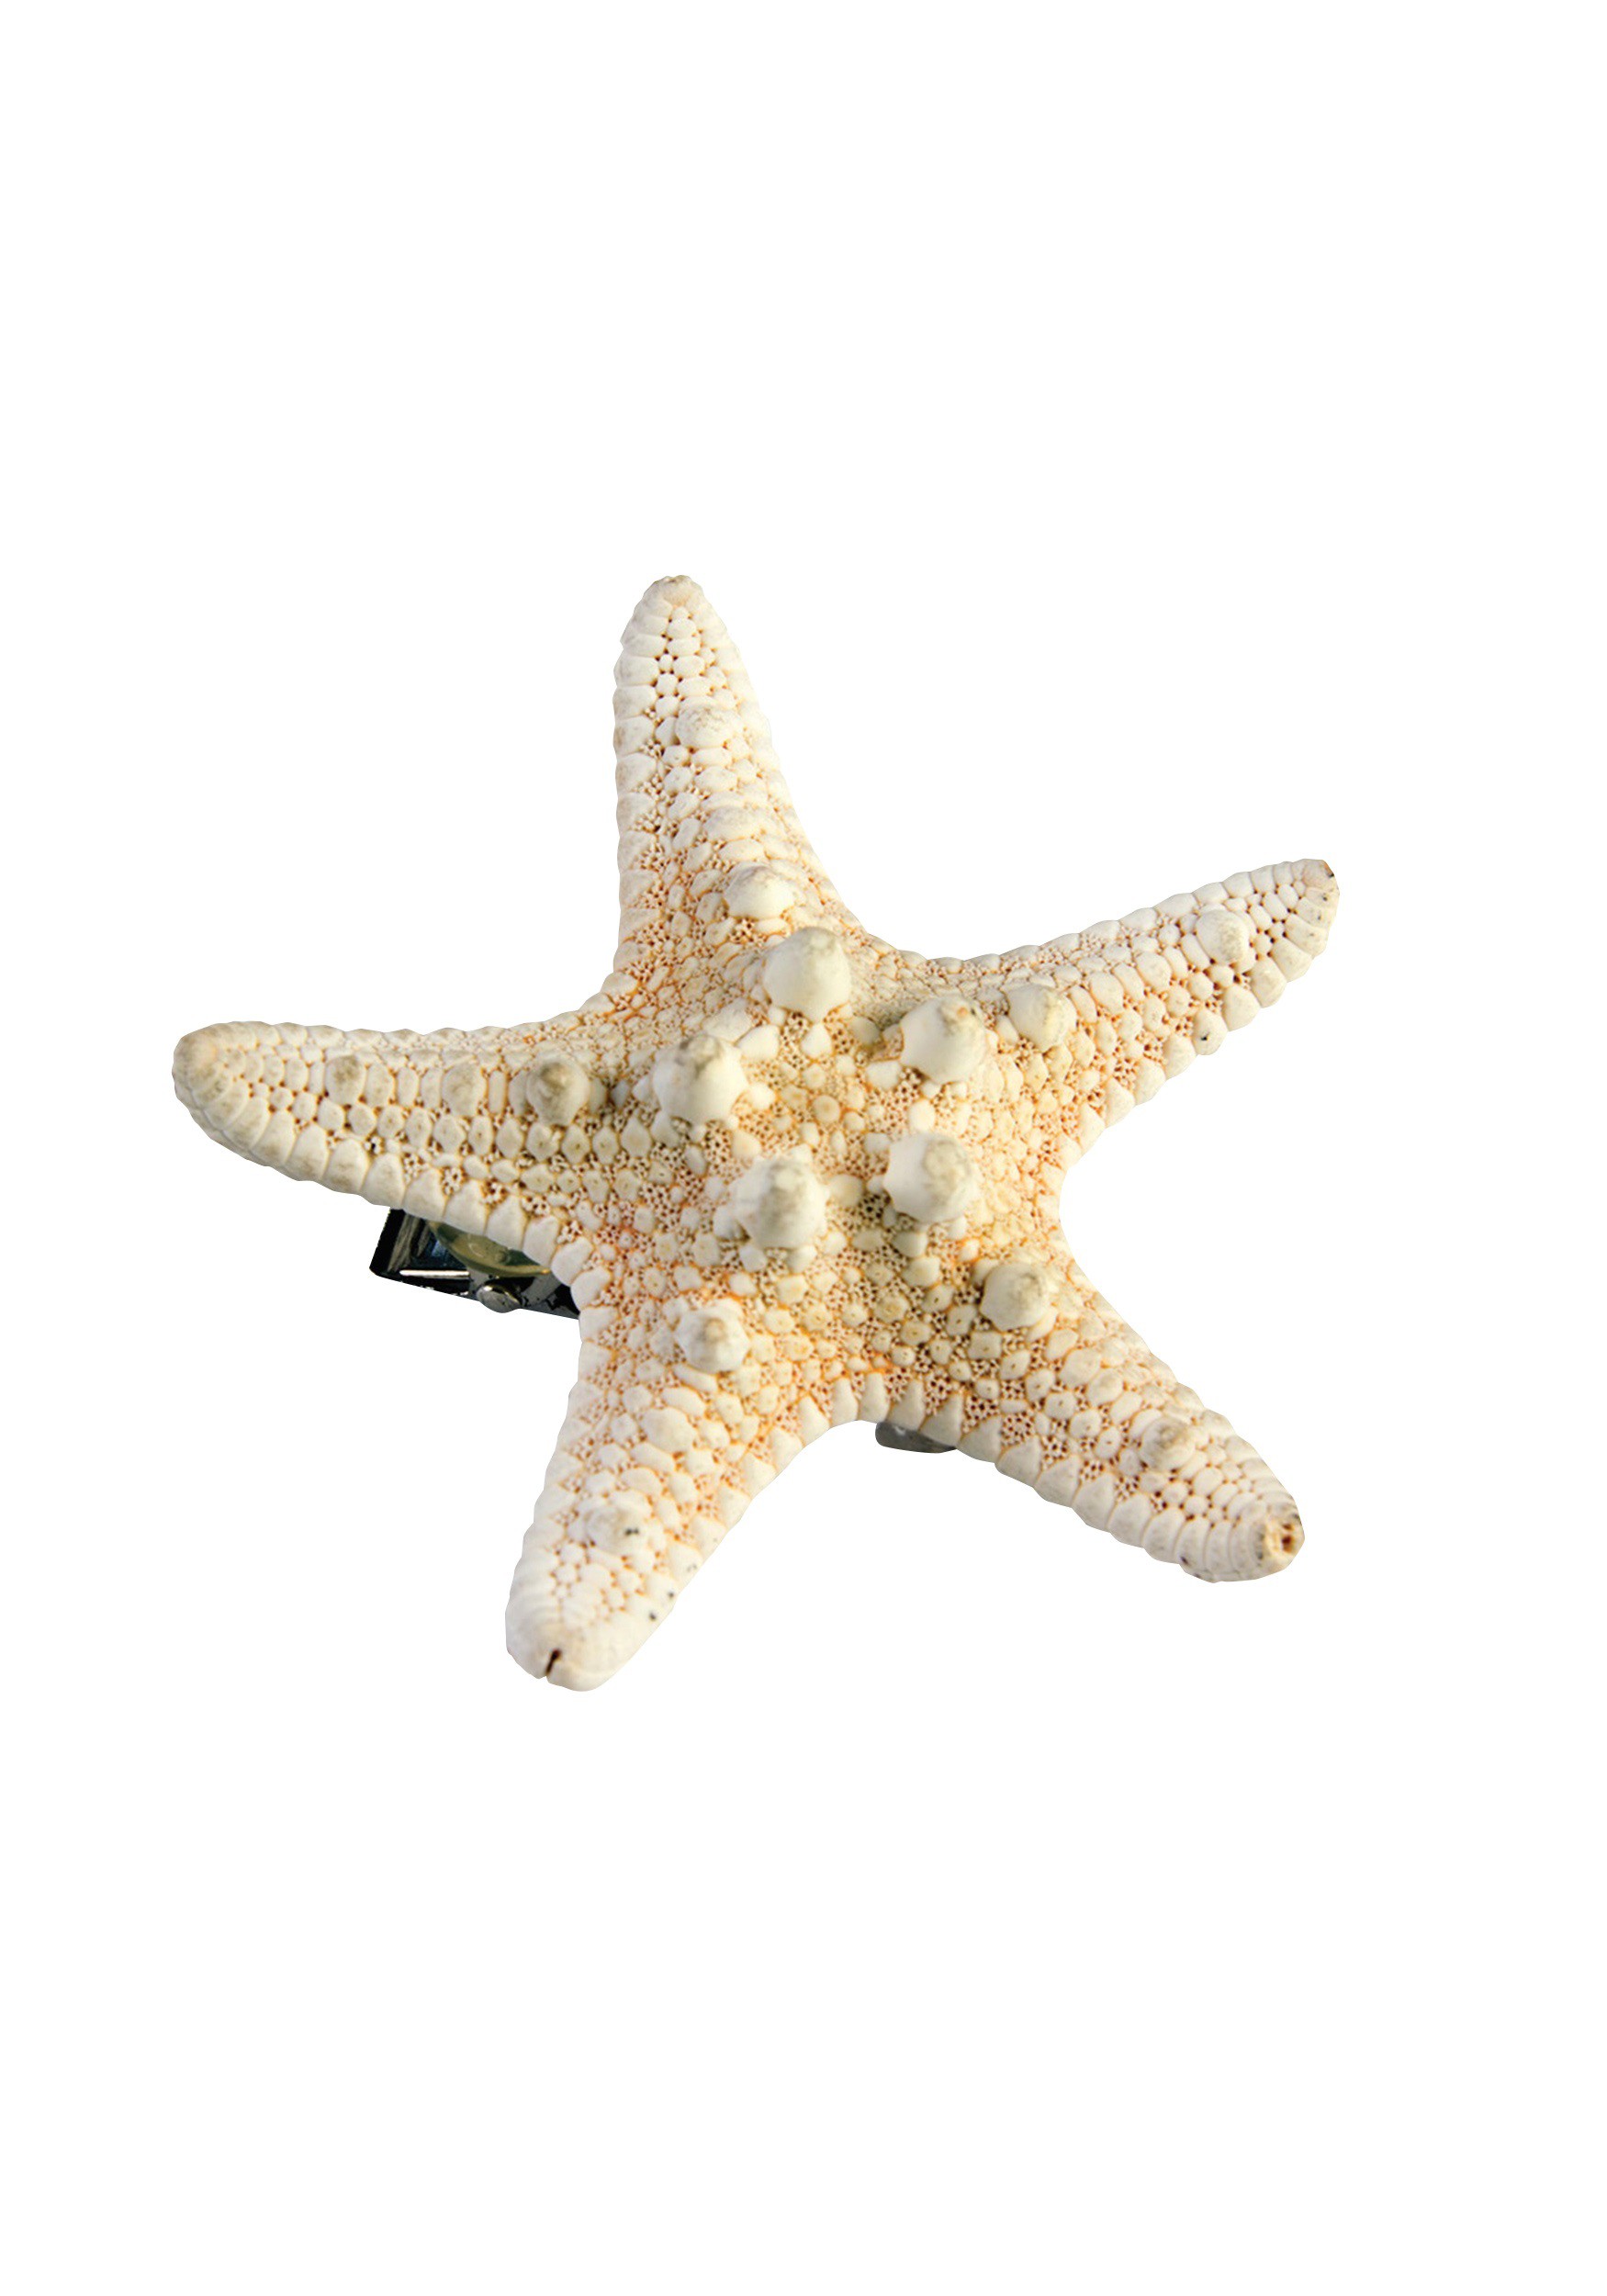 Star fish photo